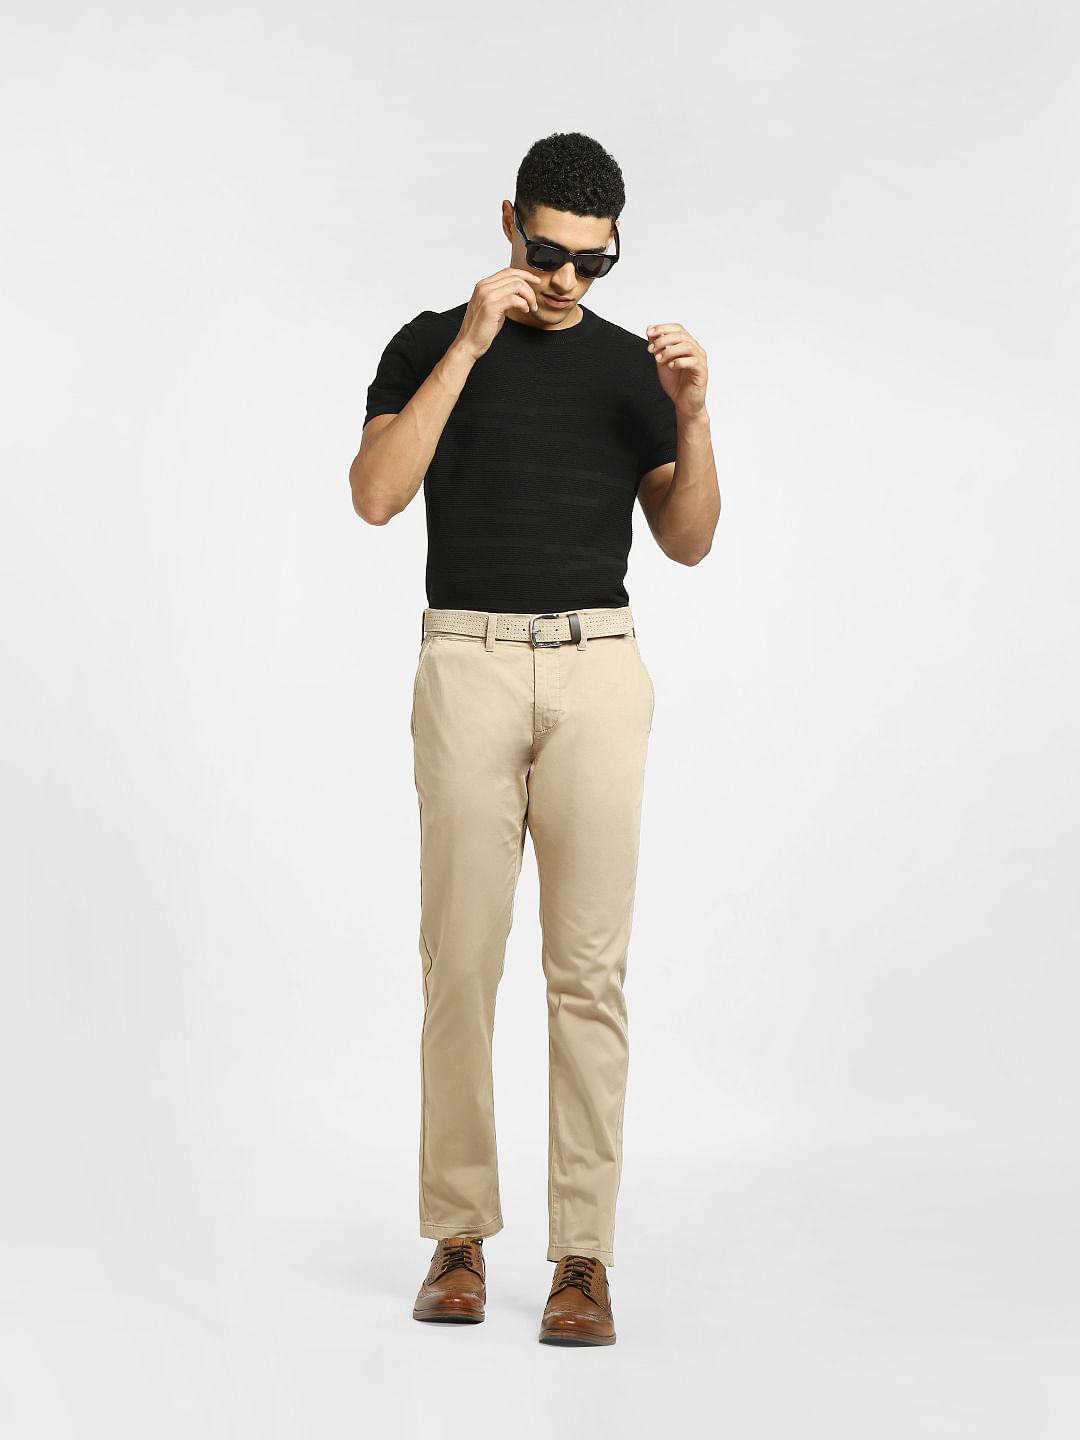 K. K Garments 2 pcs Men's Regular Fit Lycra Blend Trousers for Men | Regular  Fit Lycra Lower for Boys (26, Darkgrey & lightgrey) : Amazon.in: Clothing &  Accessories